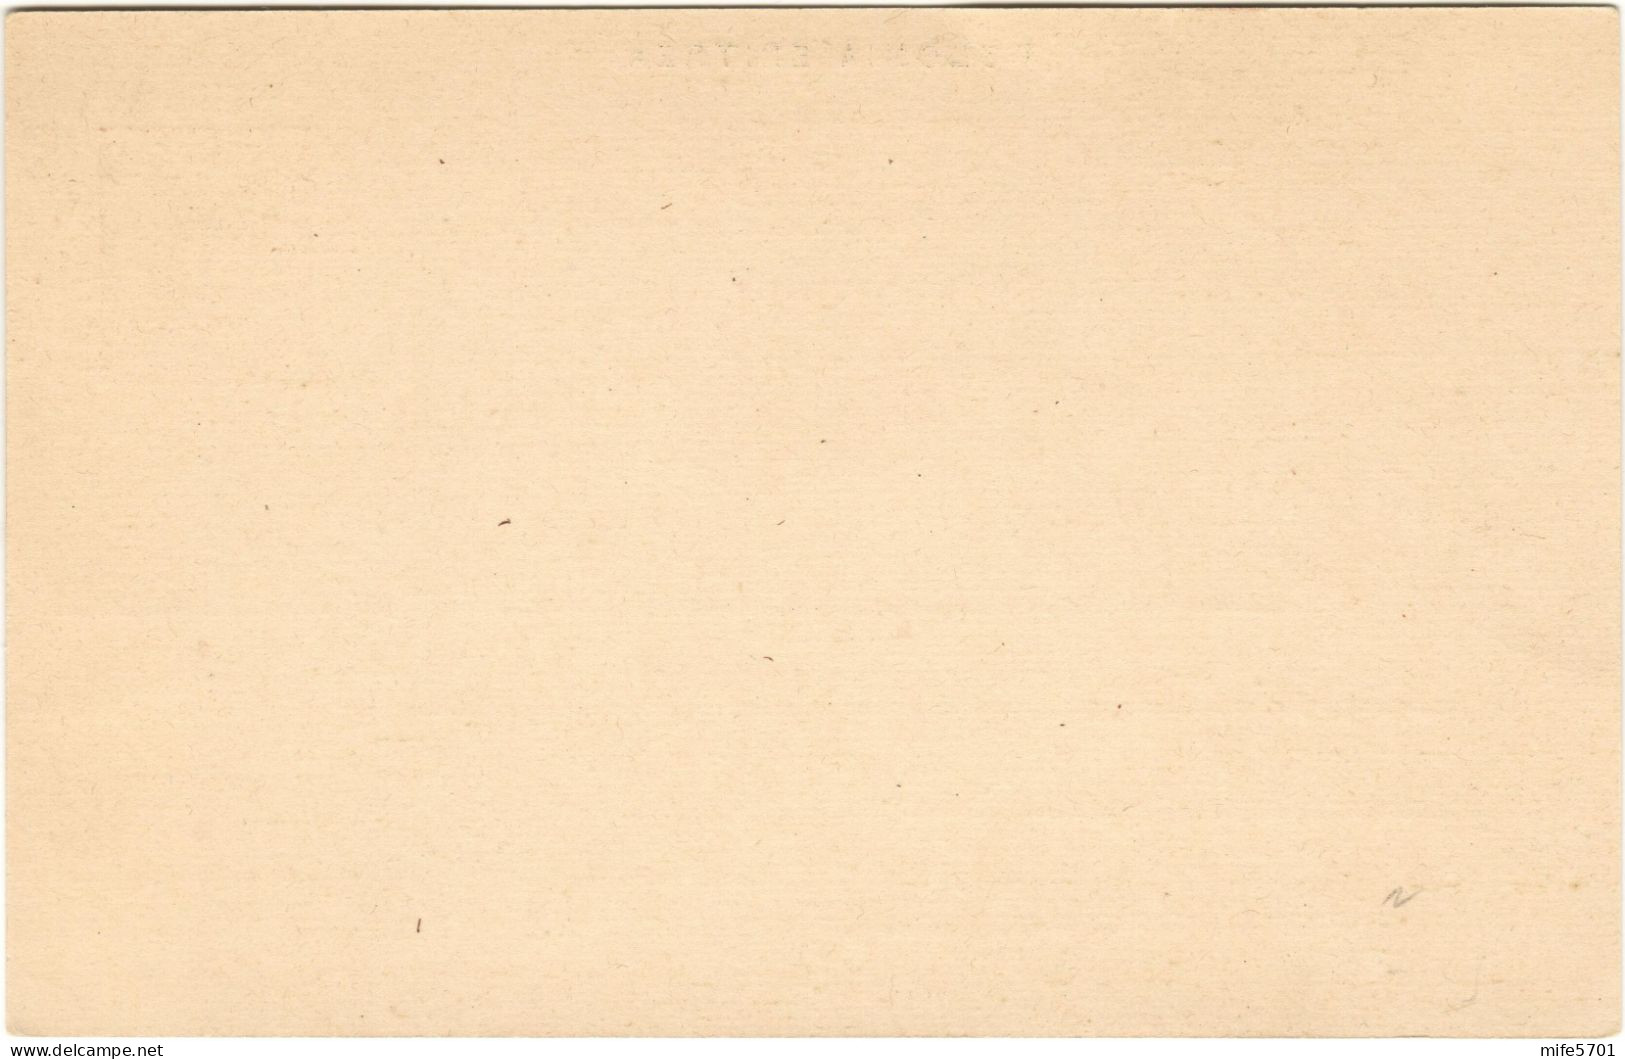 REGNO / COLONIE / ERITREA C11 / 902 (1903) CARTOLINA C. 10 'FLOREALE' SOPRASTAMPATA 'COLONIA ERITREA' MILLESIMO 902 - Erythrée